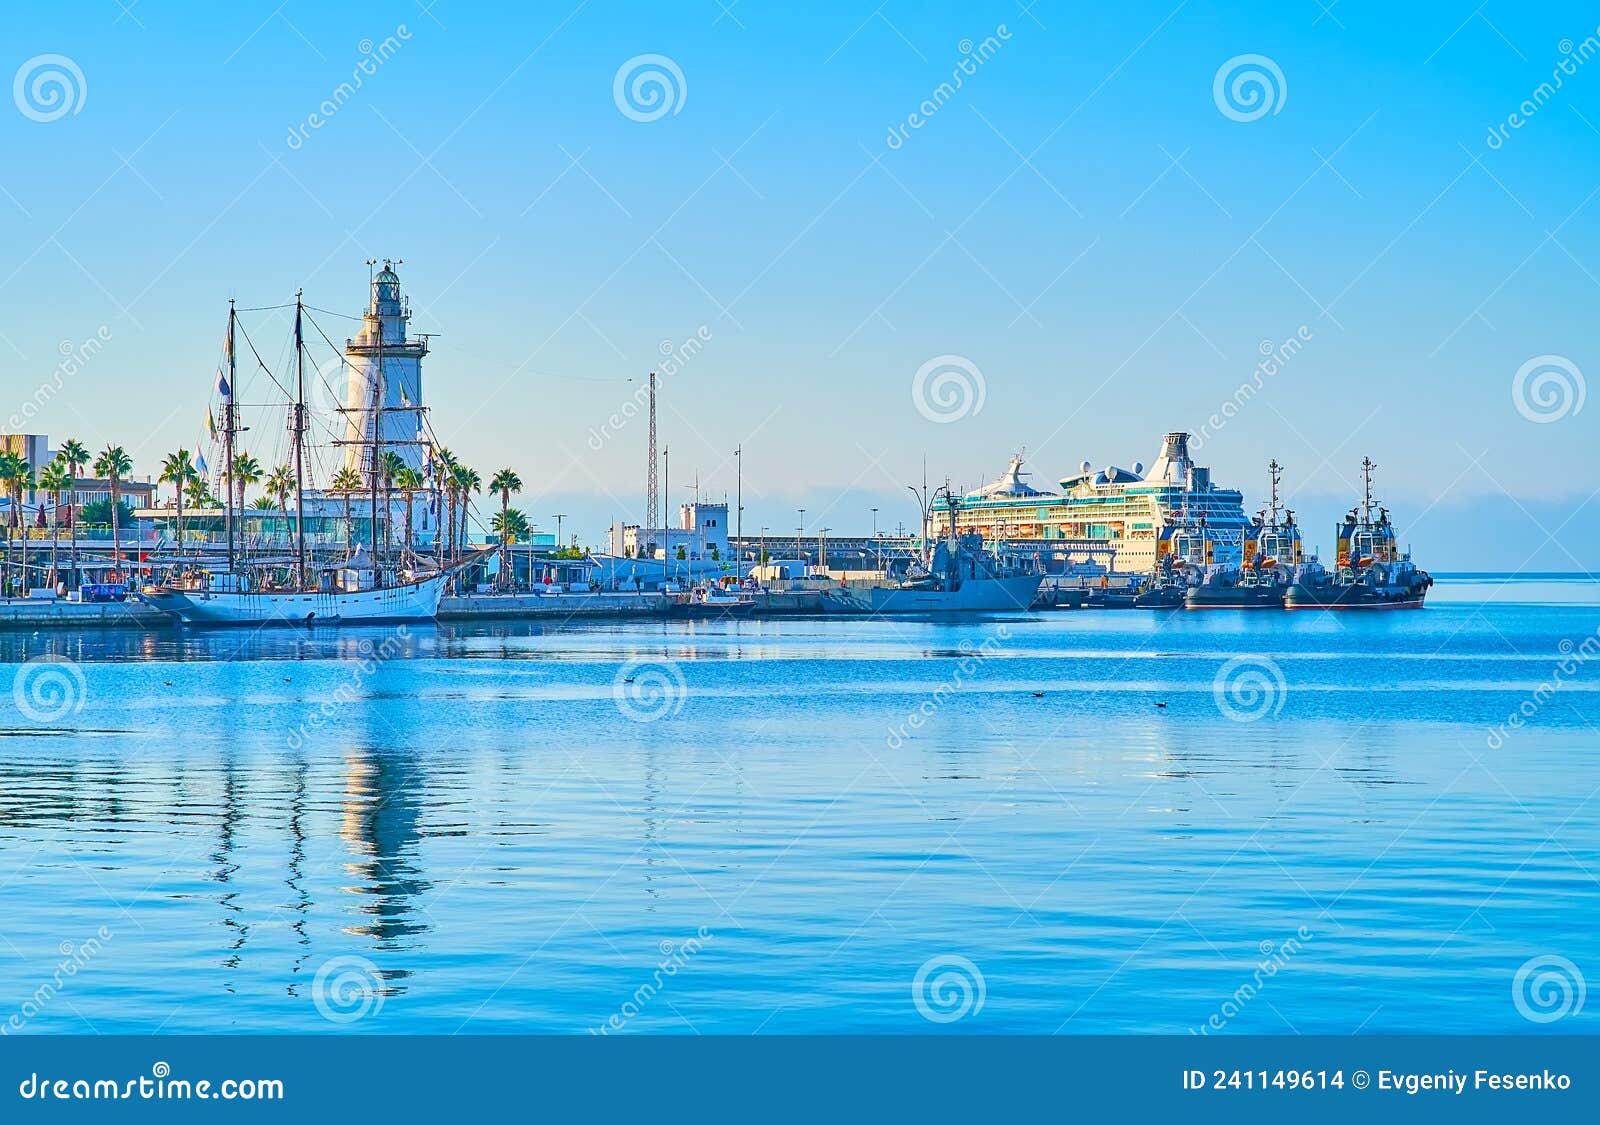 la farola lighthouse, yachts and ships in malaga port, spain